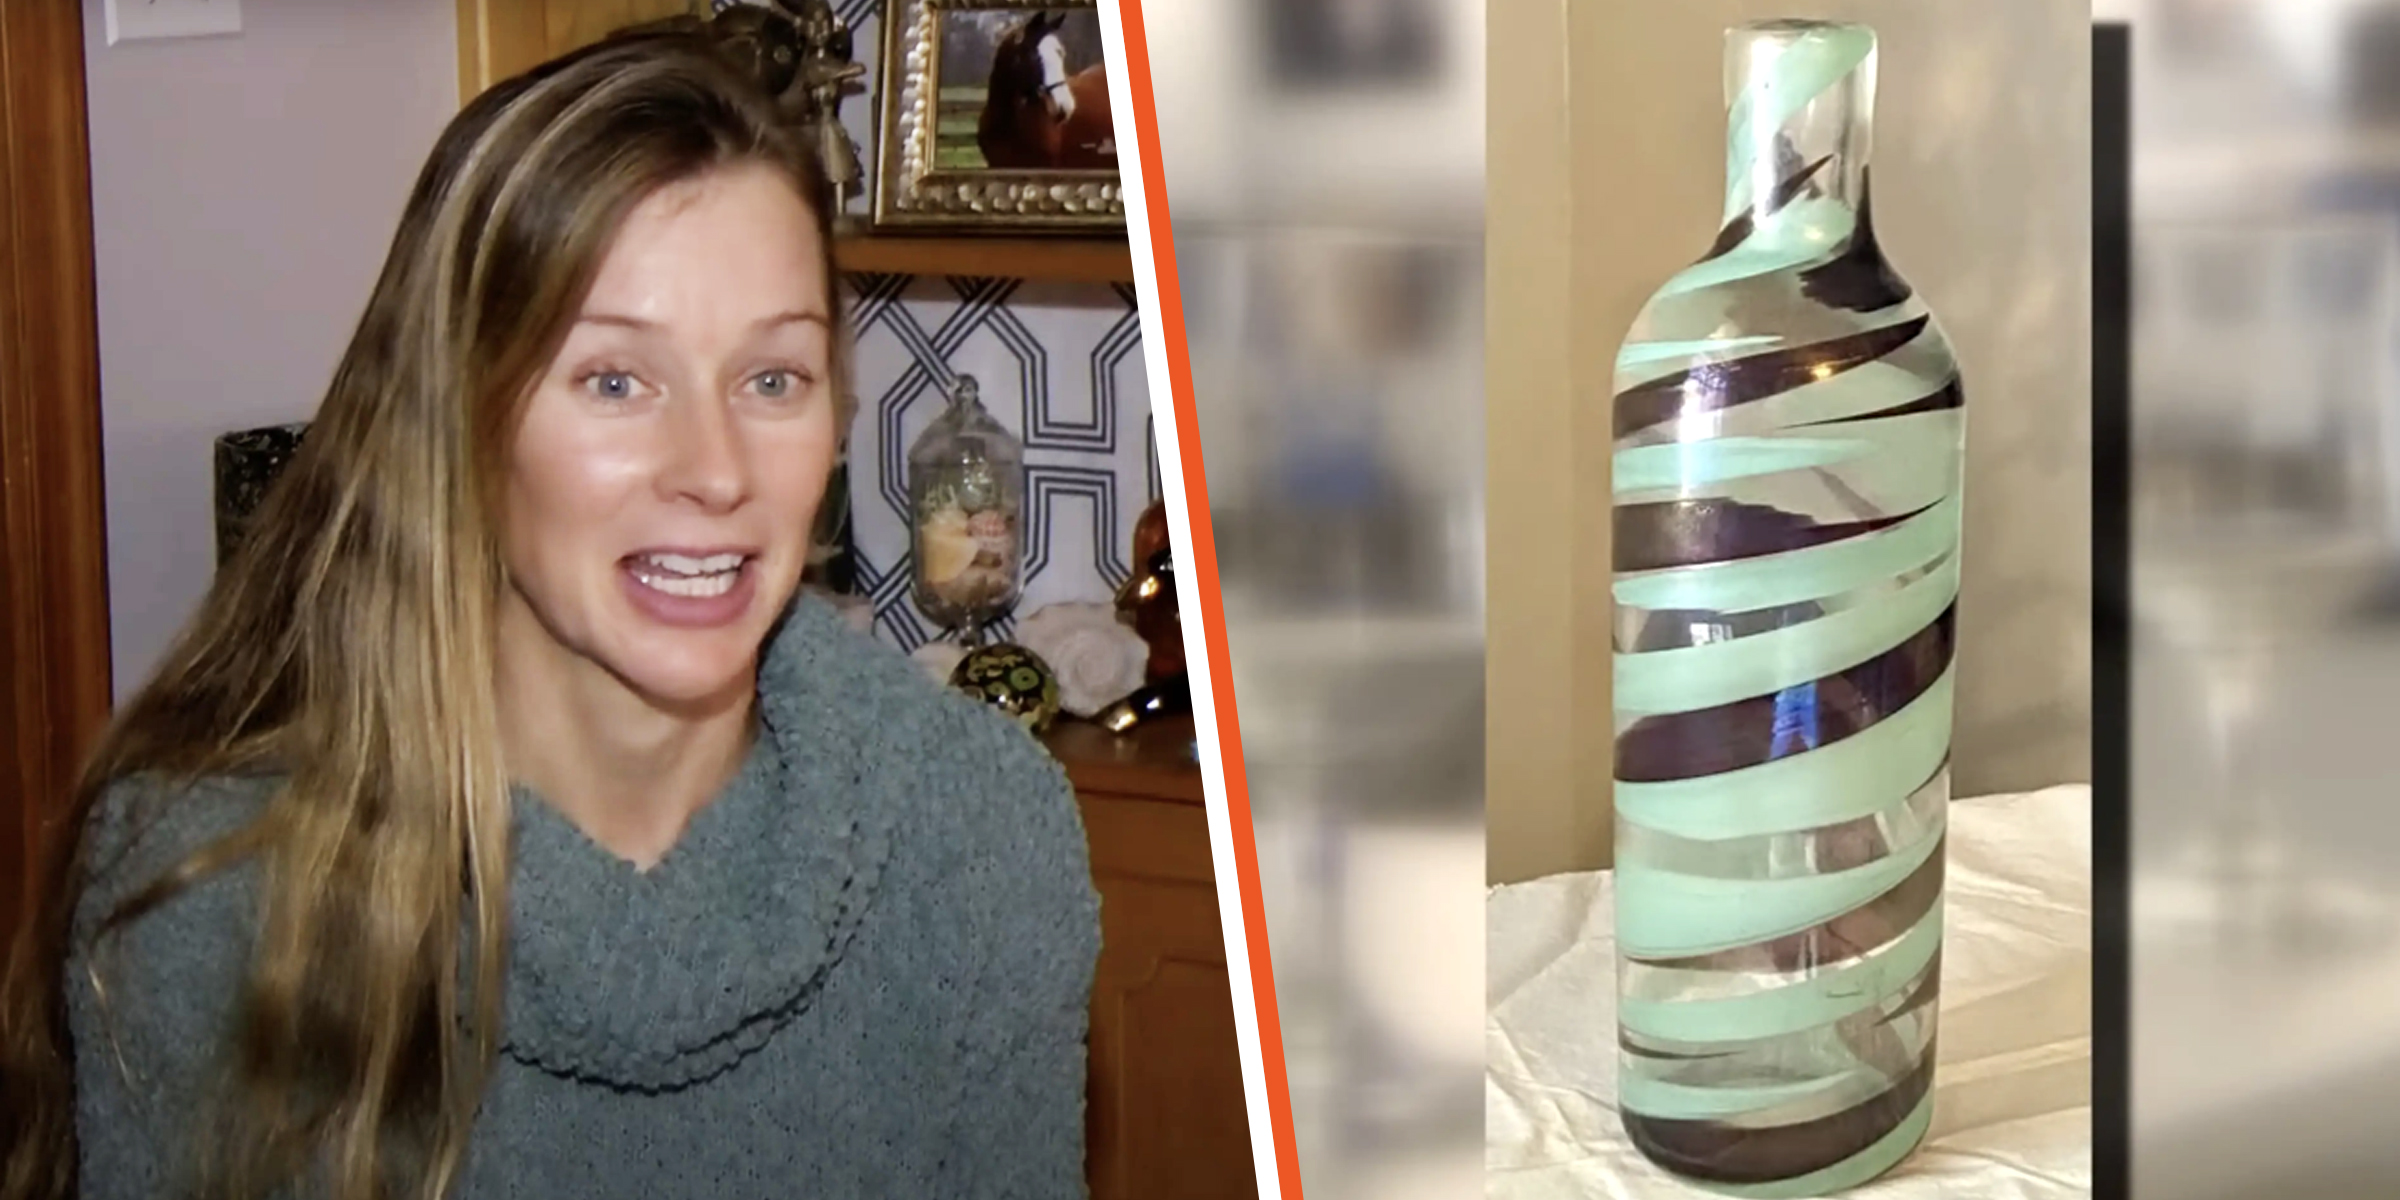 Jessica Vincent | A glass vase | Source: Youtube.com/WUSA9news